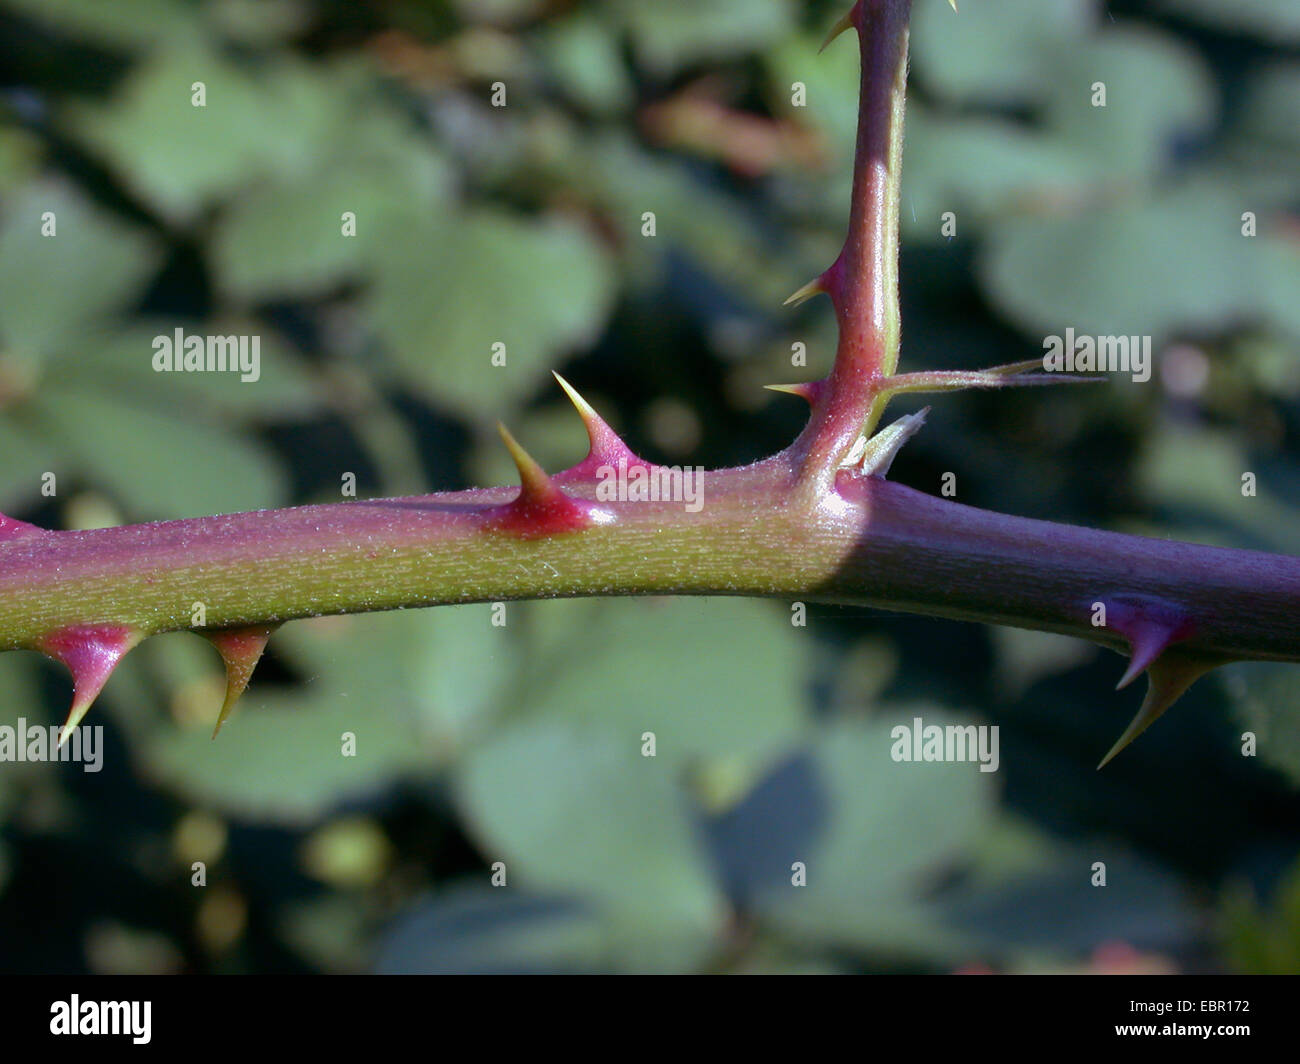 Armenian blackberry (Rubus armeniacus), branch with prickles, Germany Stock Photo